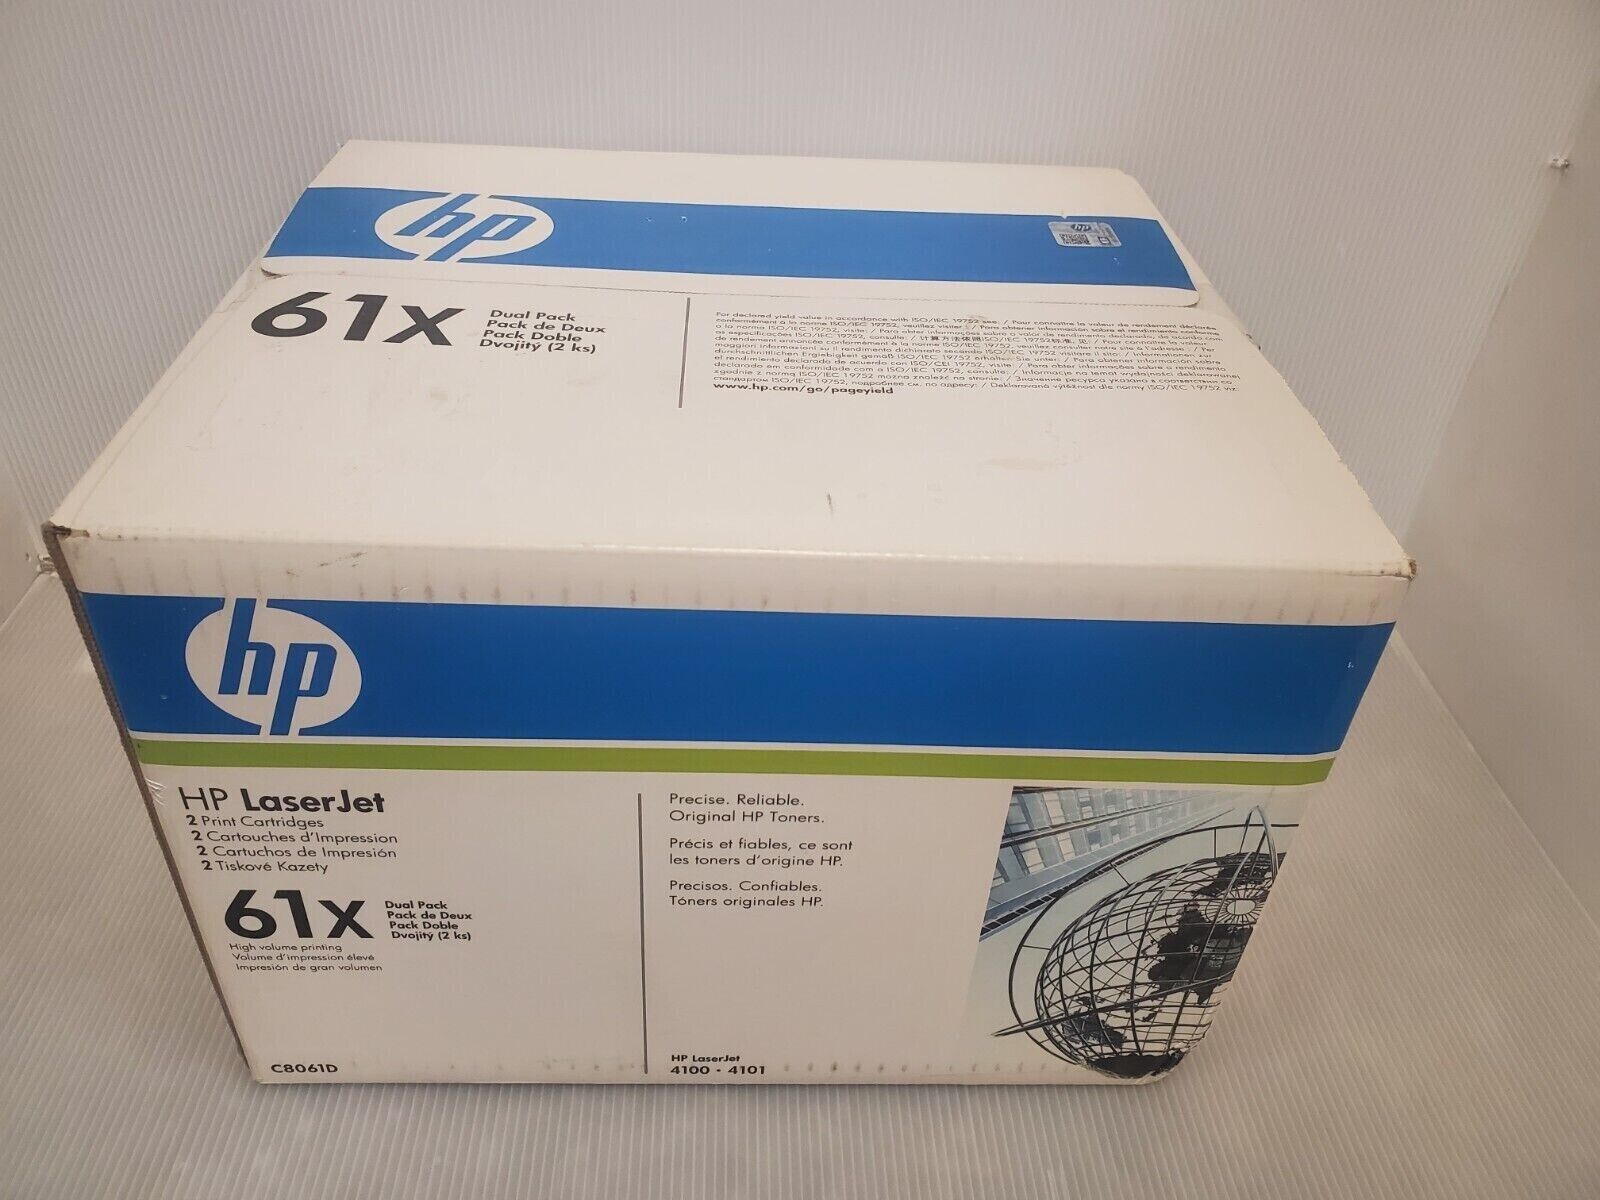 Genuine HP LaserJet 4100 4101 Dual Pack high yield Toner cartridge C8061X HP 61X